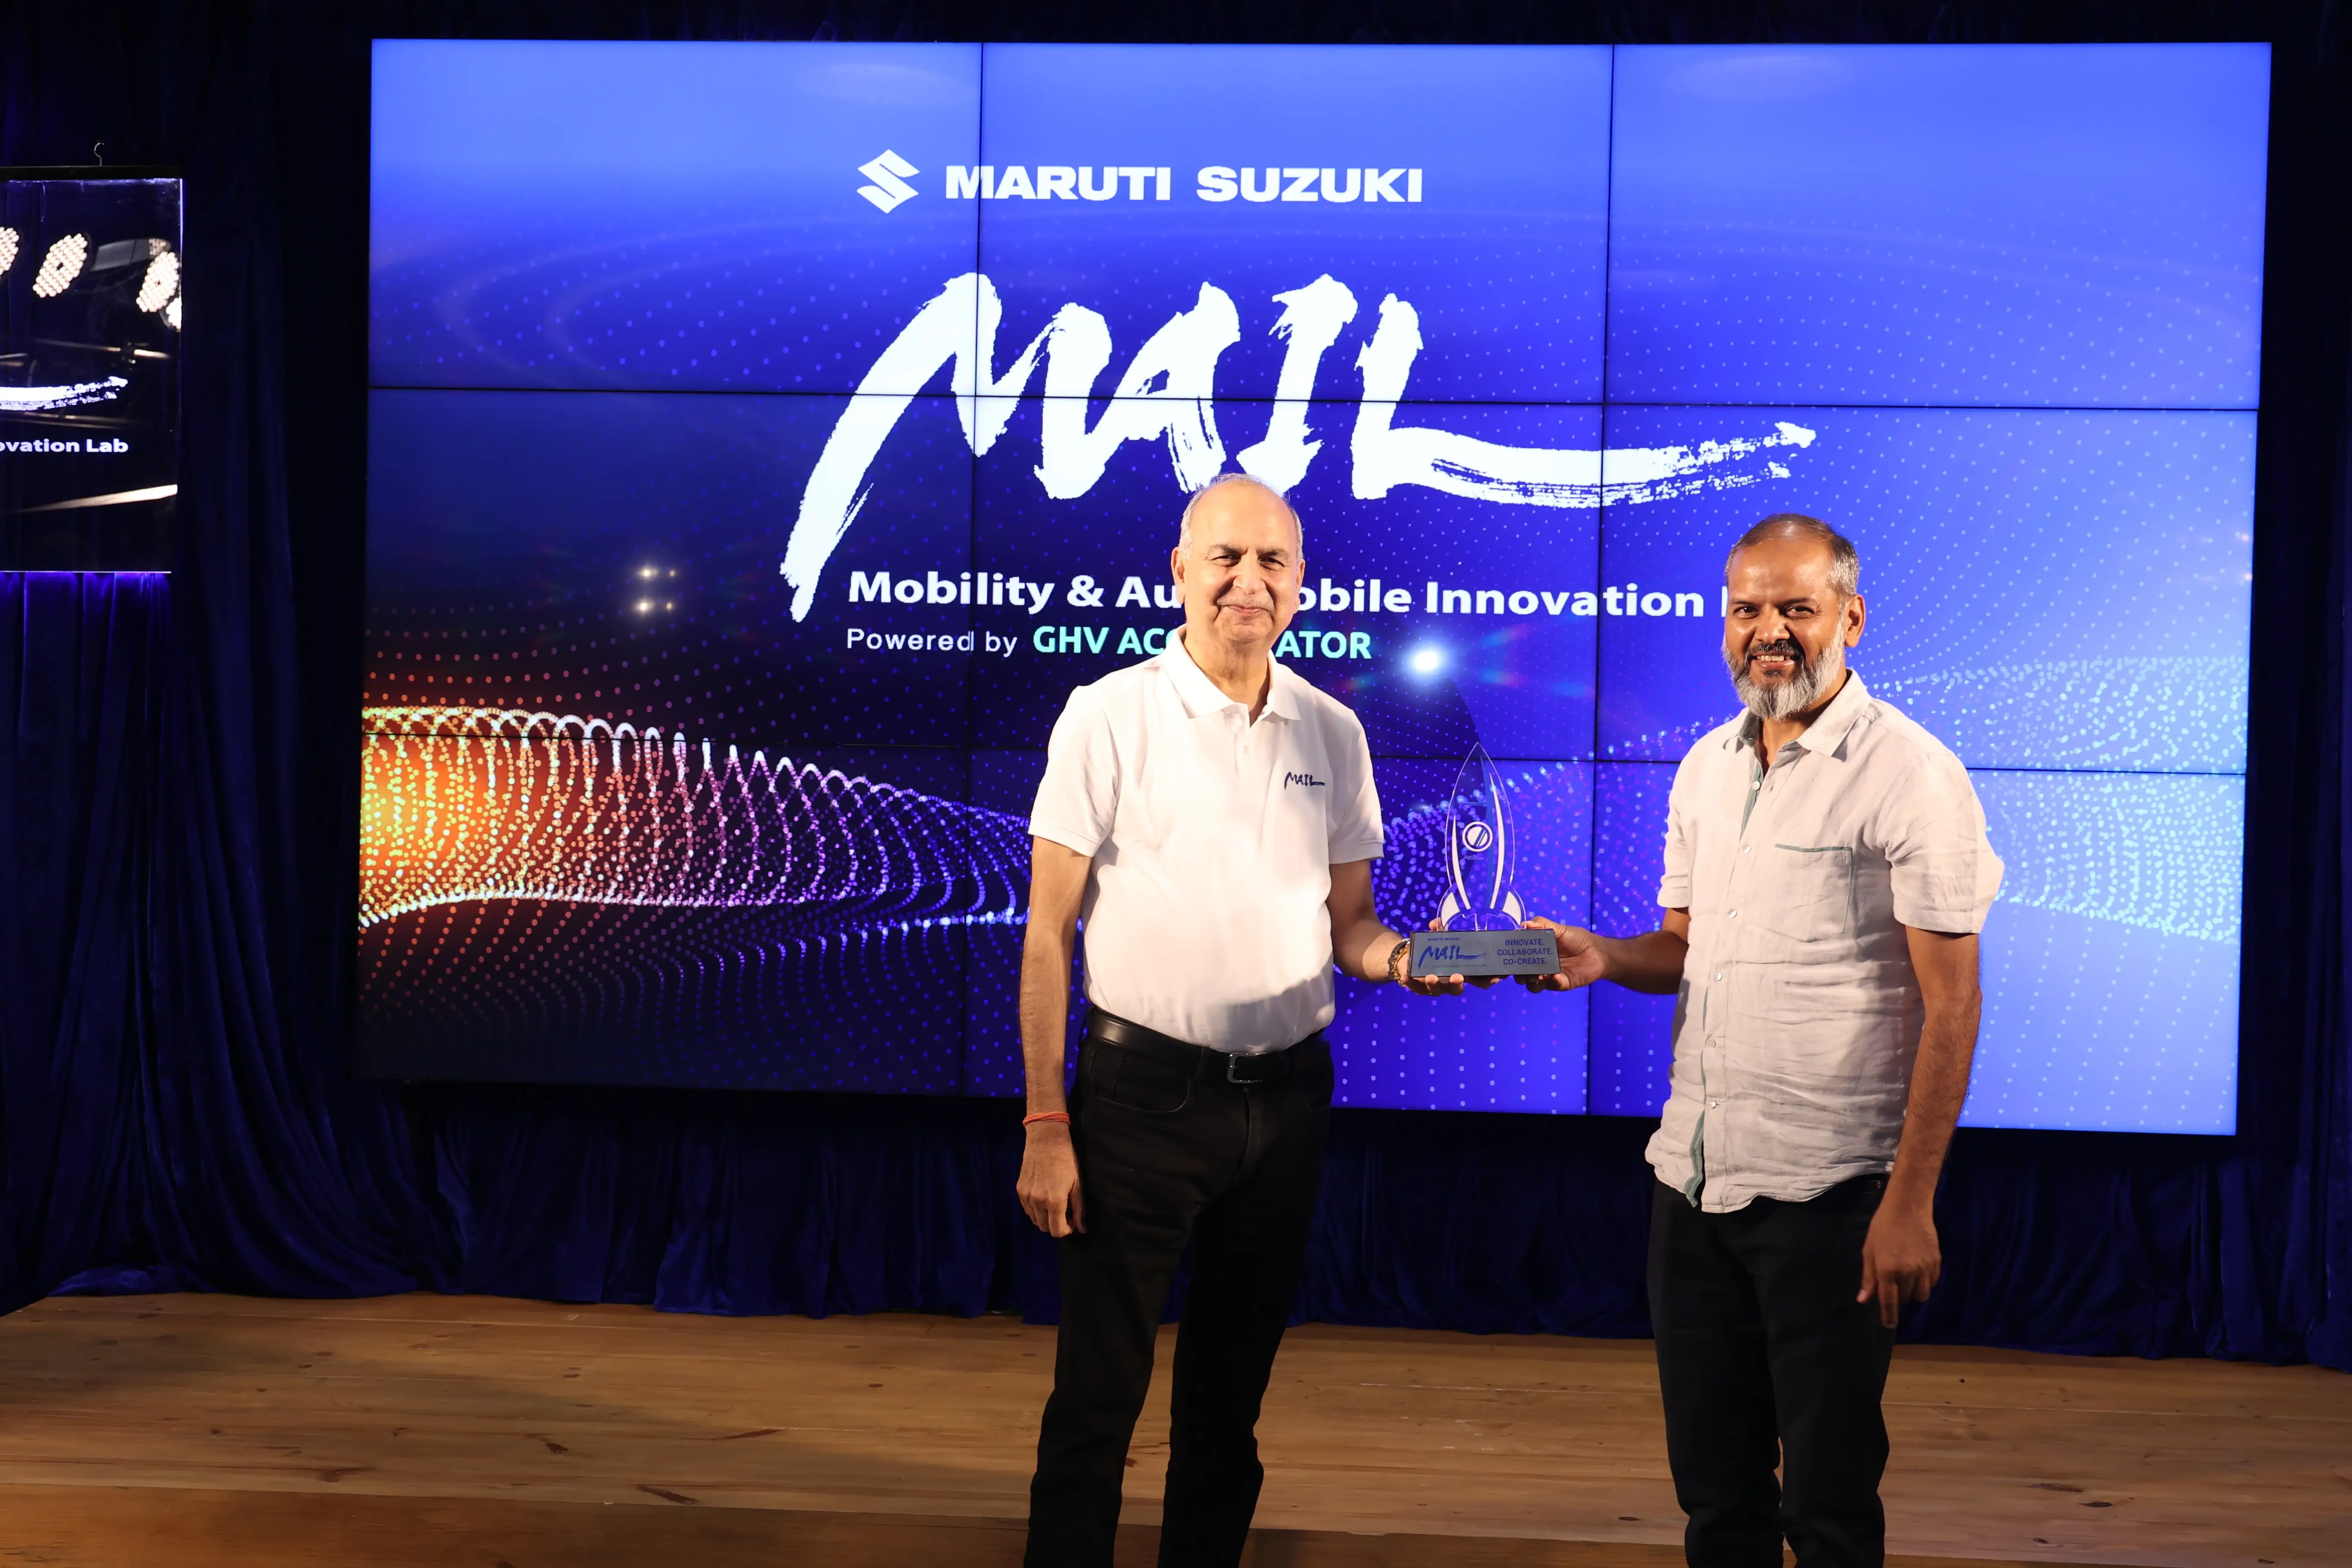 Award1 - Maruti Suzuki Innovation